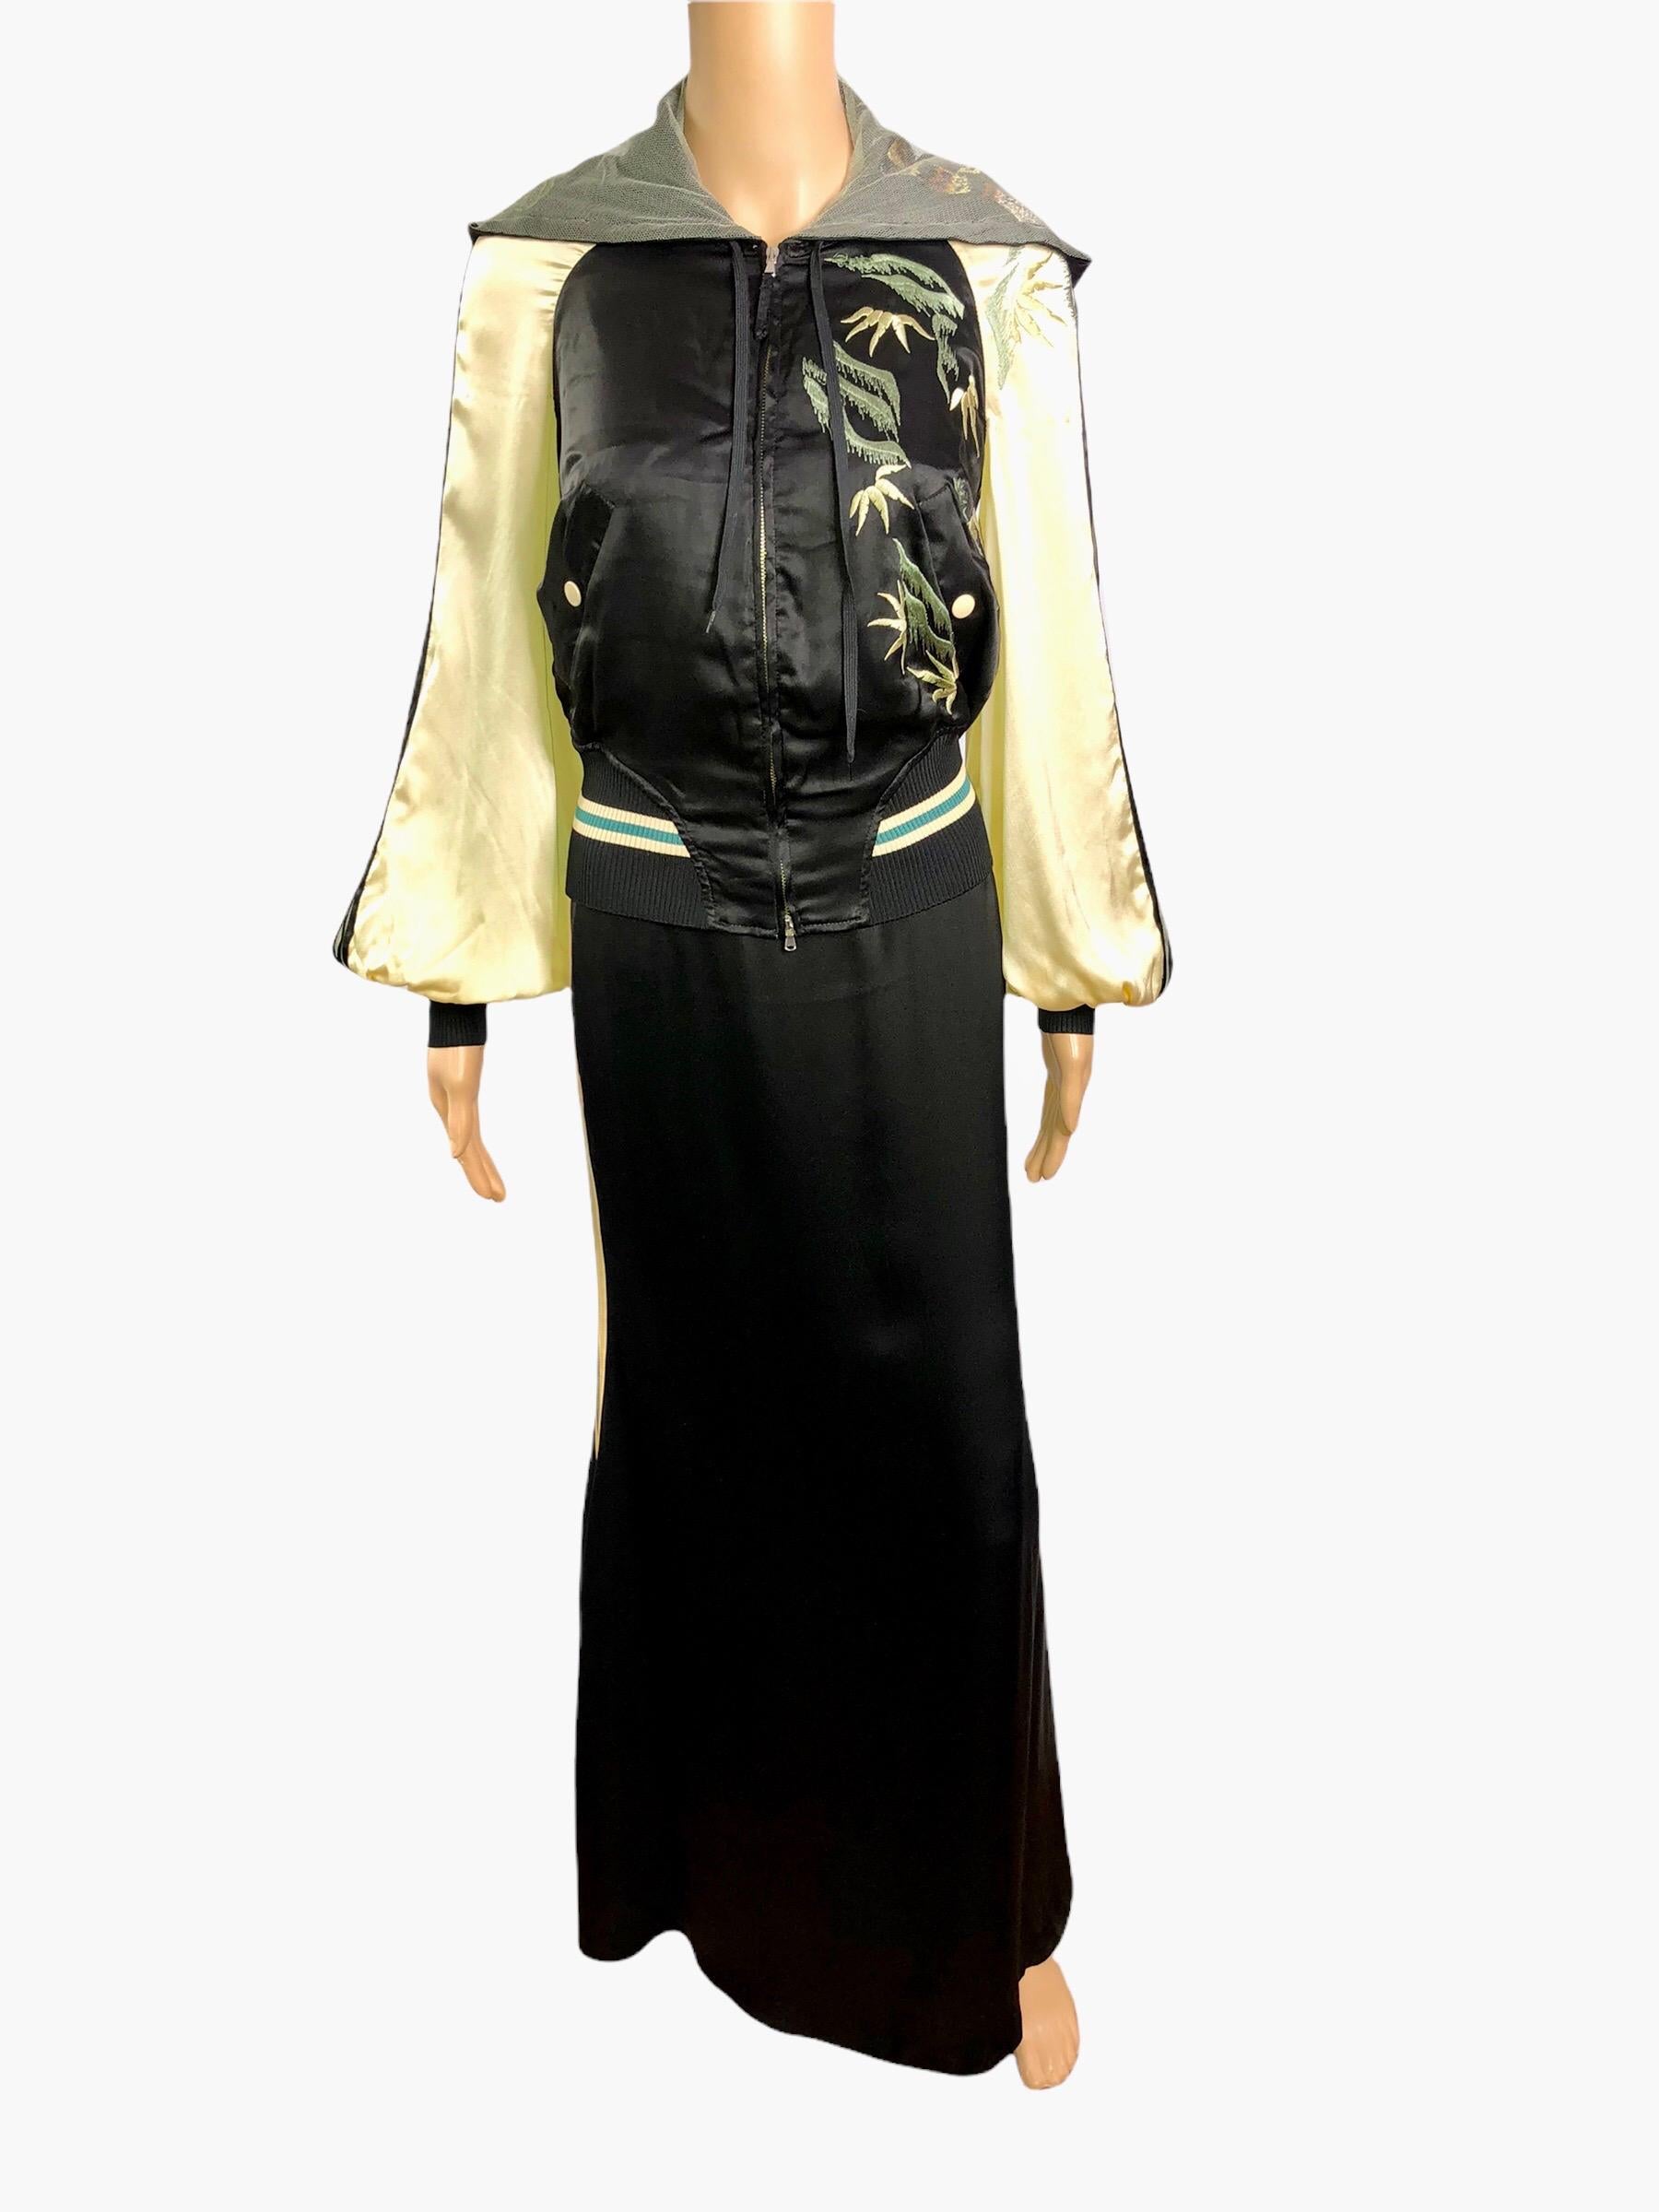 Women's or Men's Jean Paul Gaultier S/S 2007 Runway Embroidered Silk Dress & Jacket 2 Piece Set  For Sale